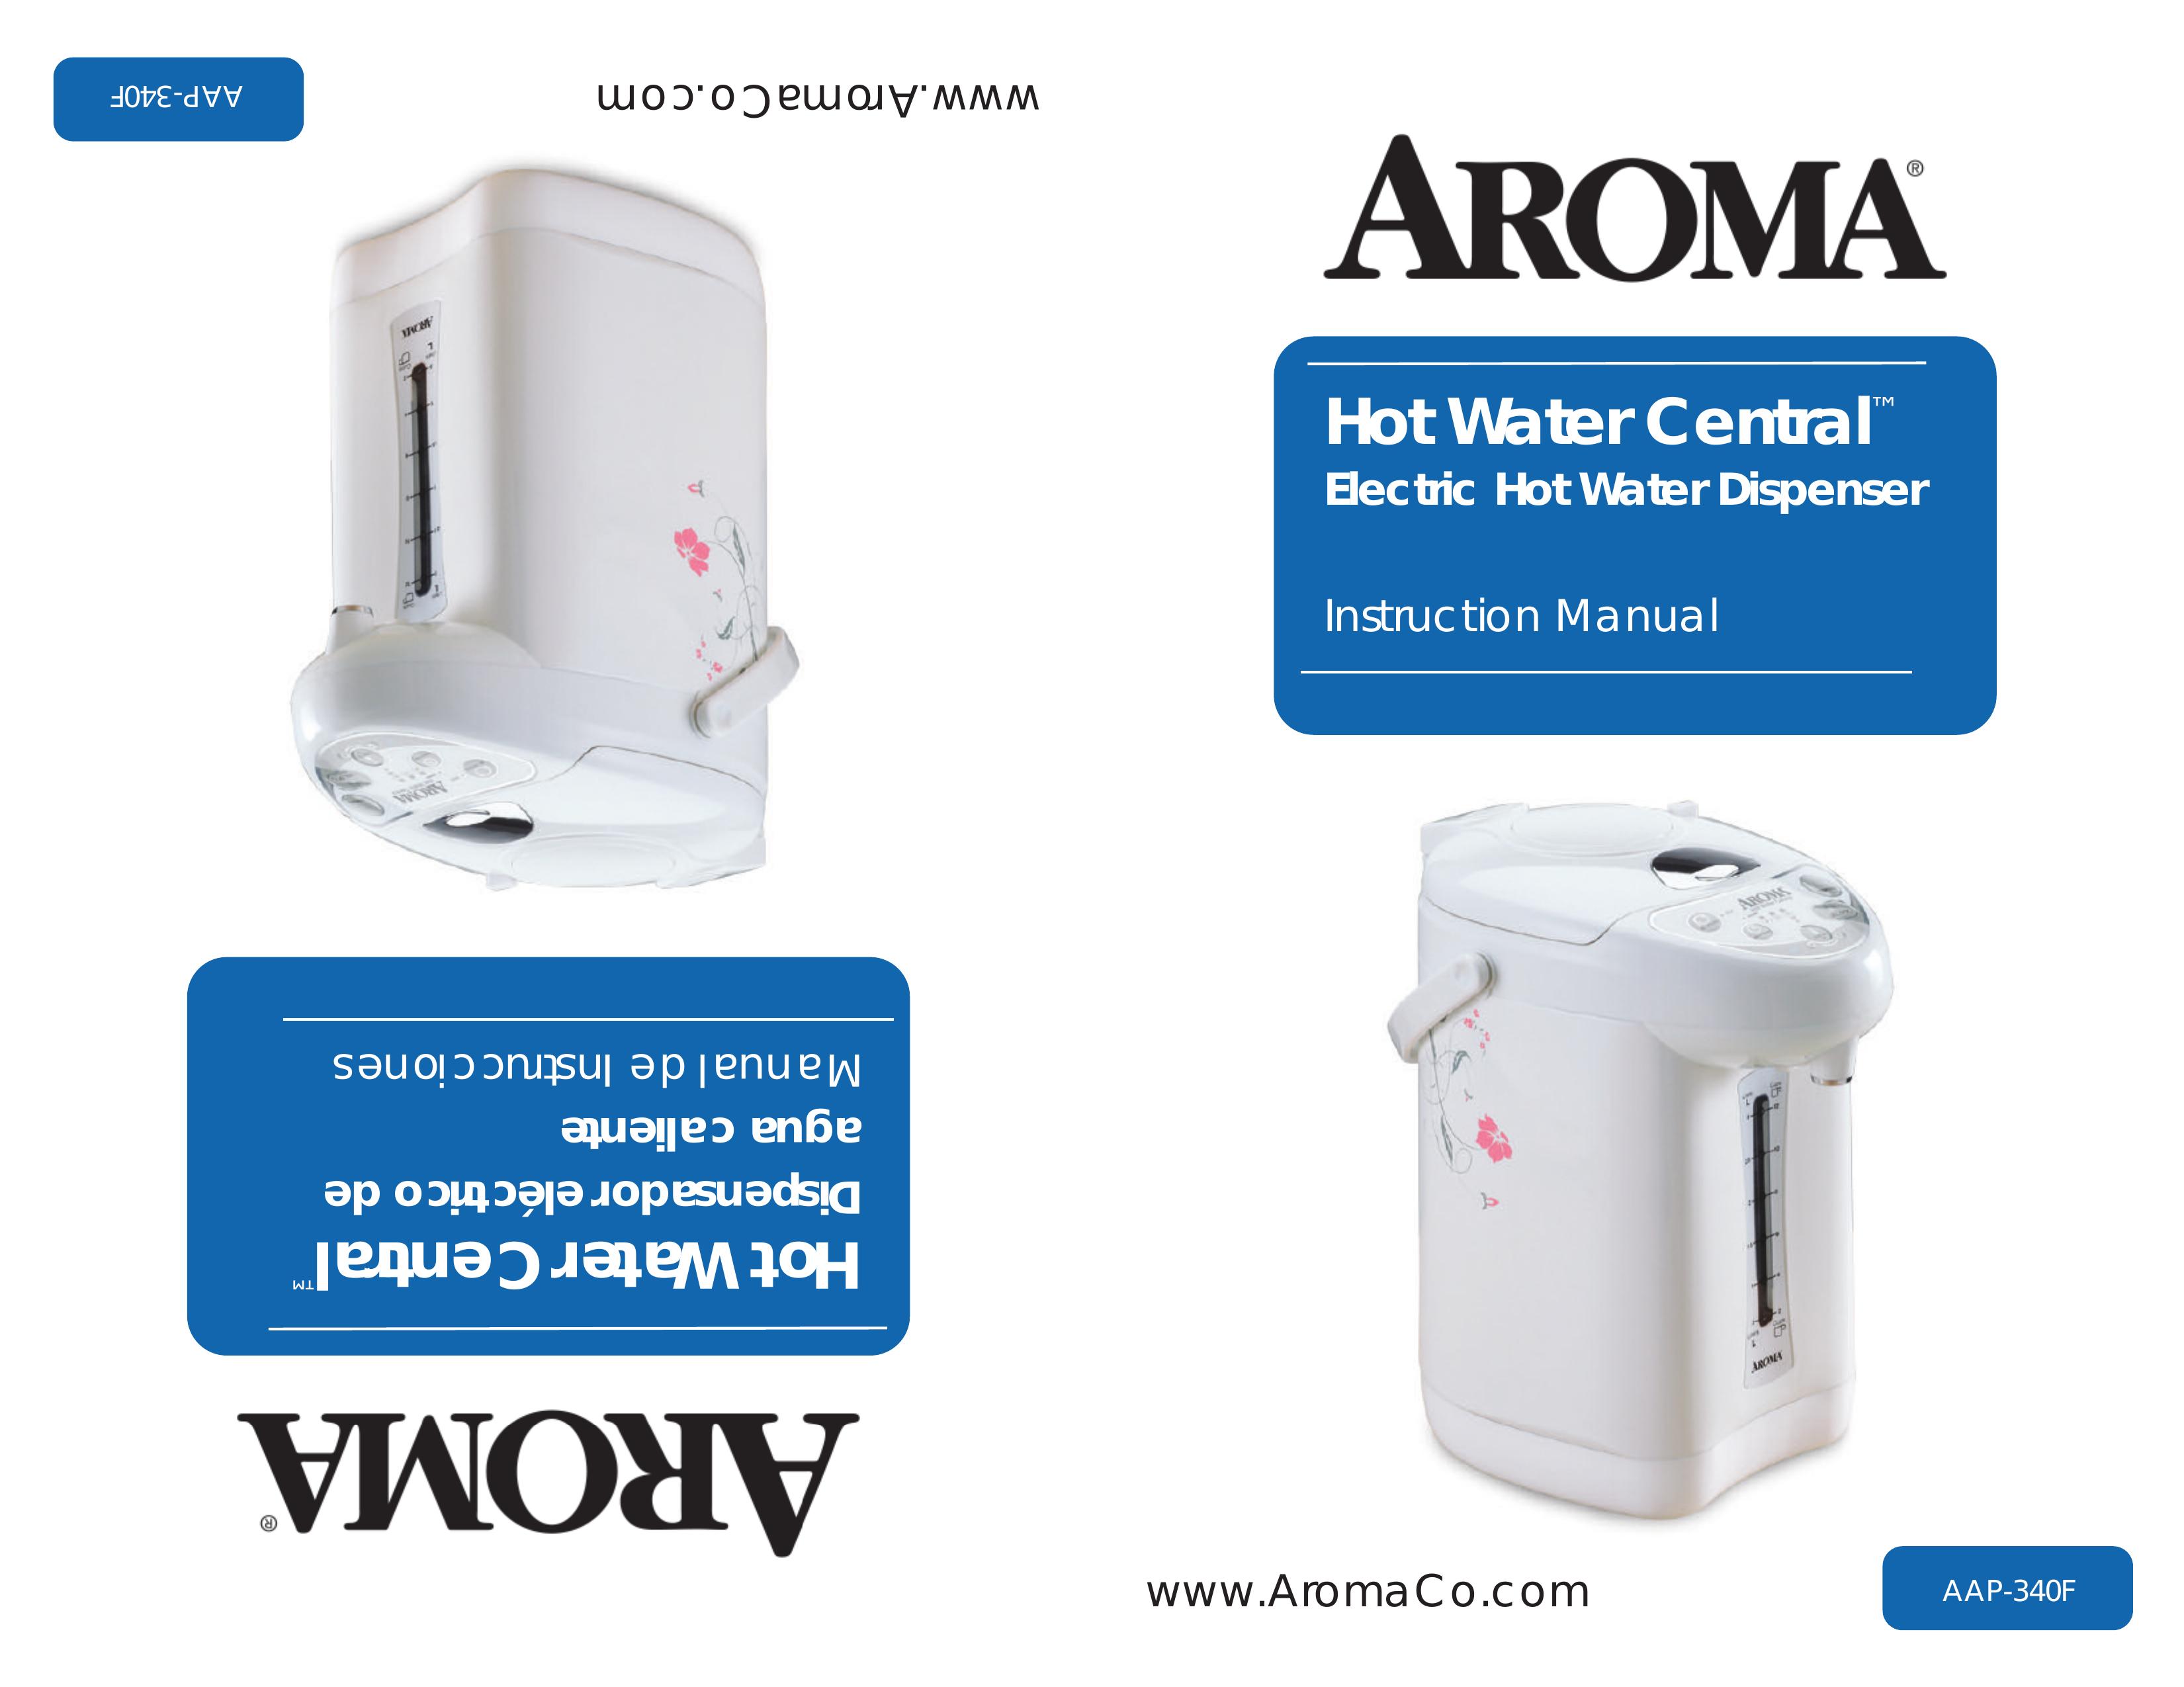 Aroma AAP-340F Water Dispenser User Manual